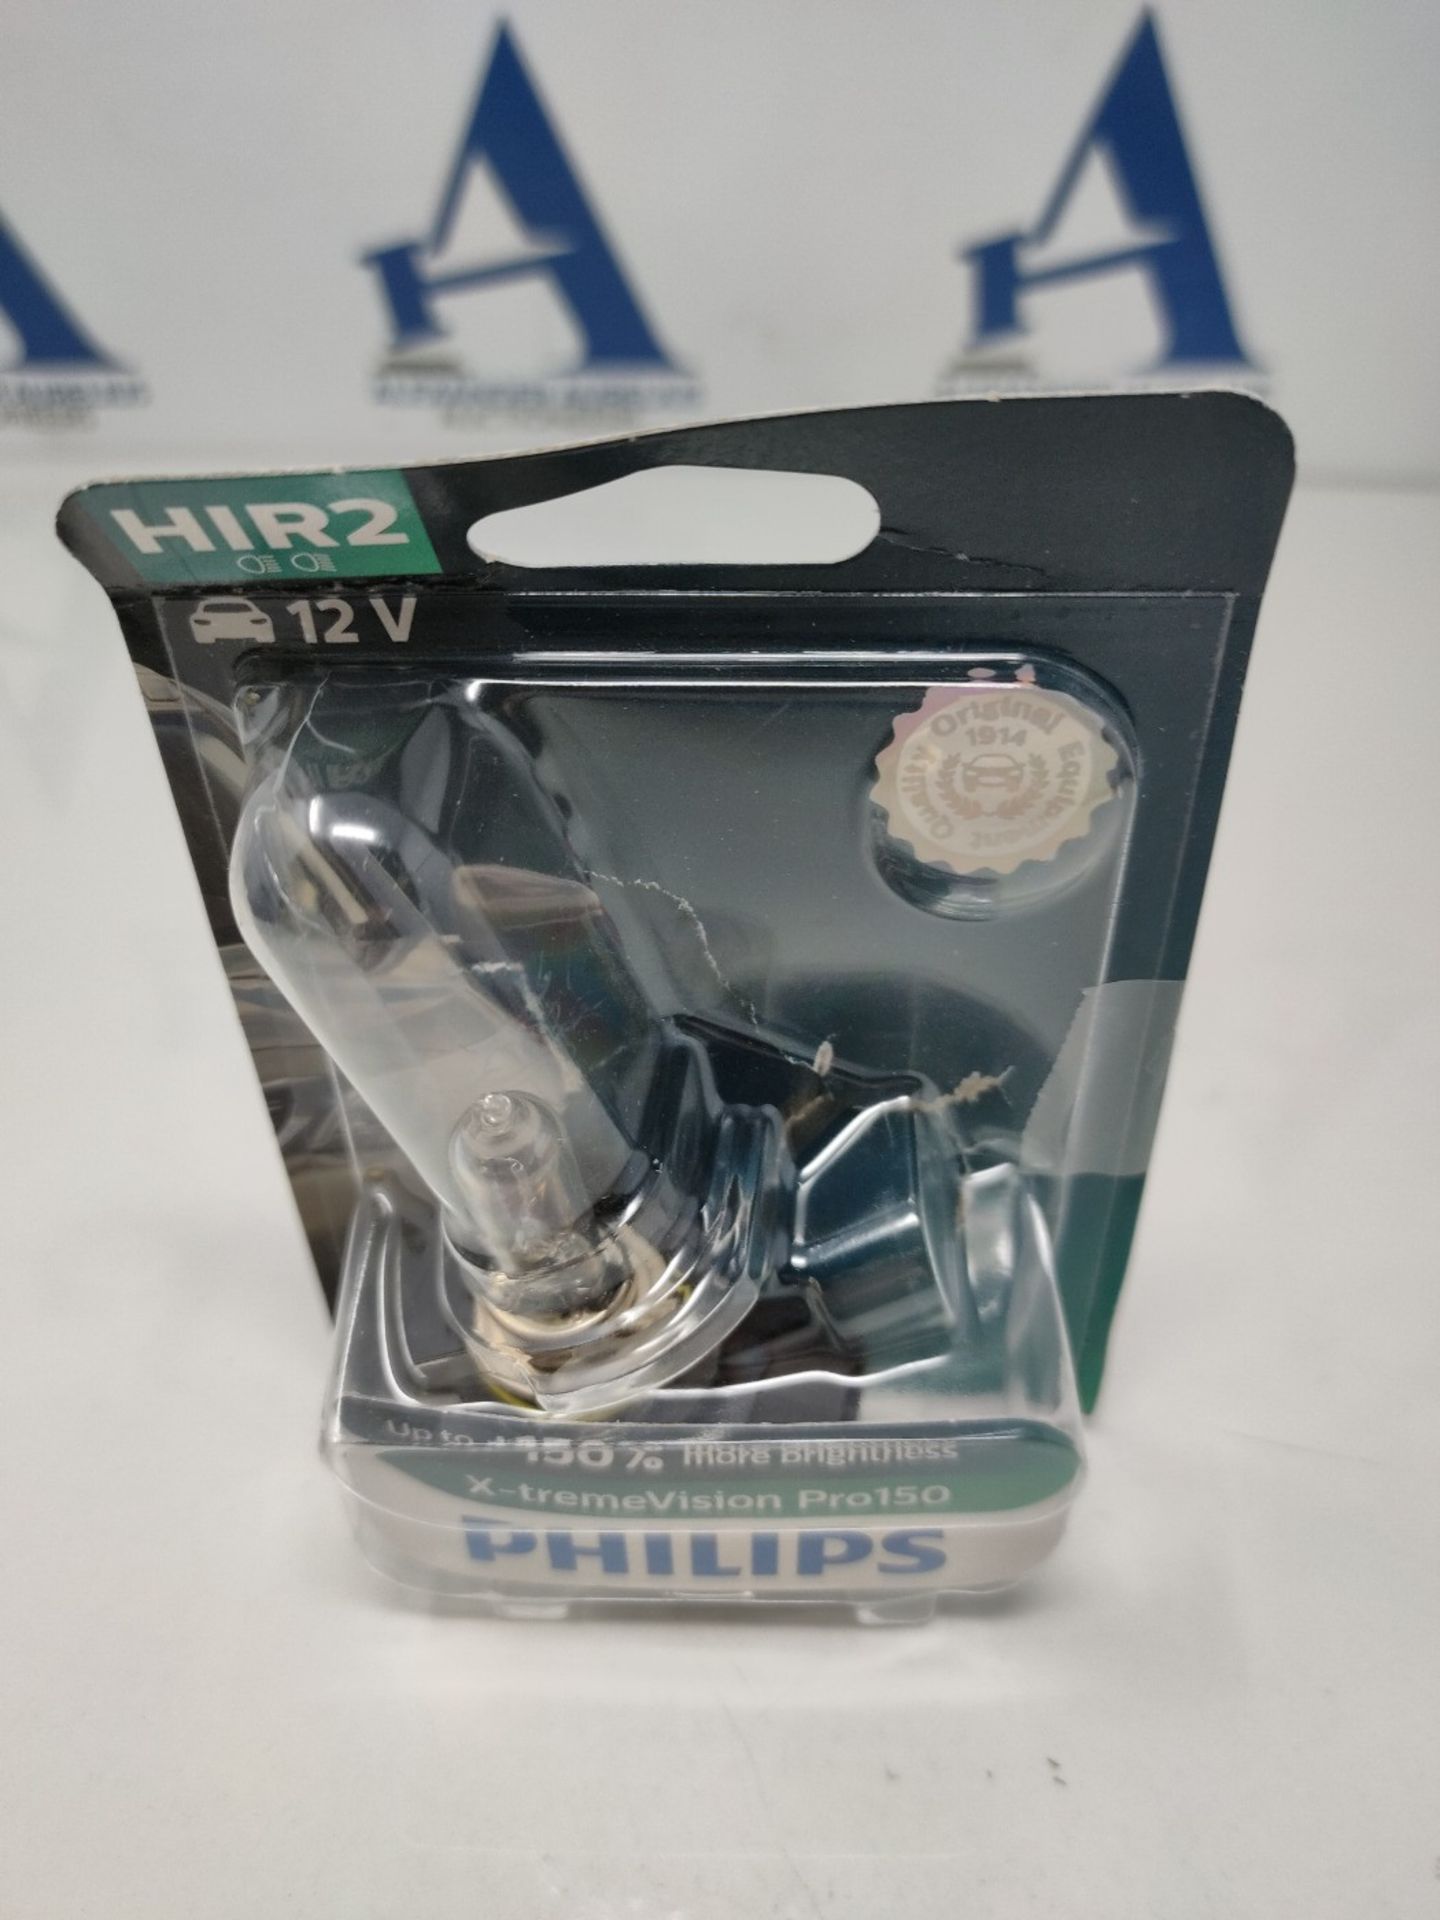 Philips X-tremeVision Pro150 HIR2 car headlight bulb +150%, single blister - Image 3 of 3